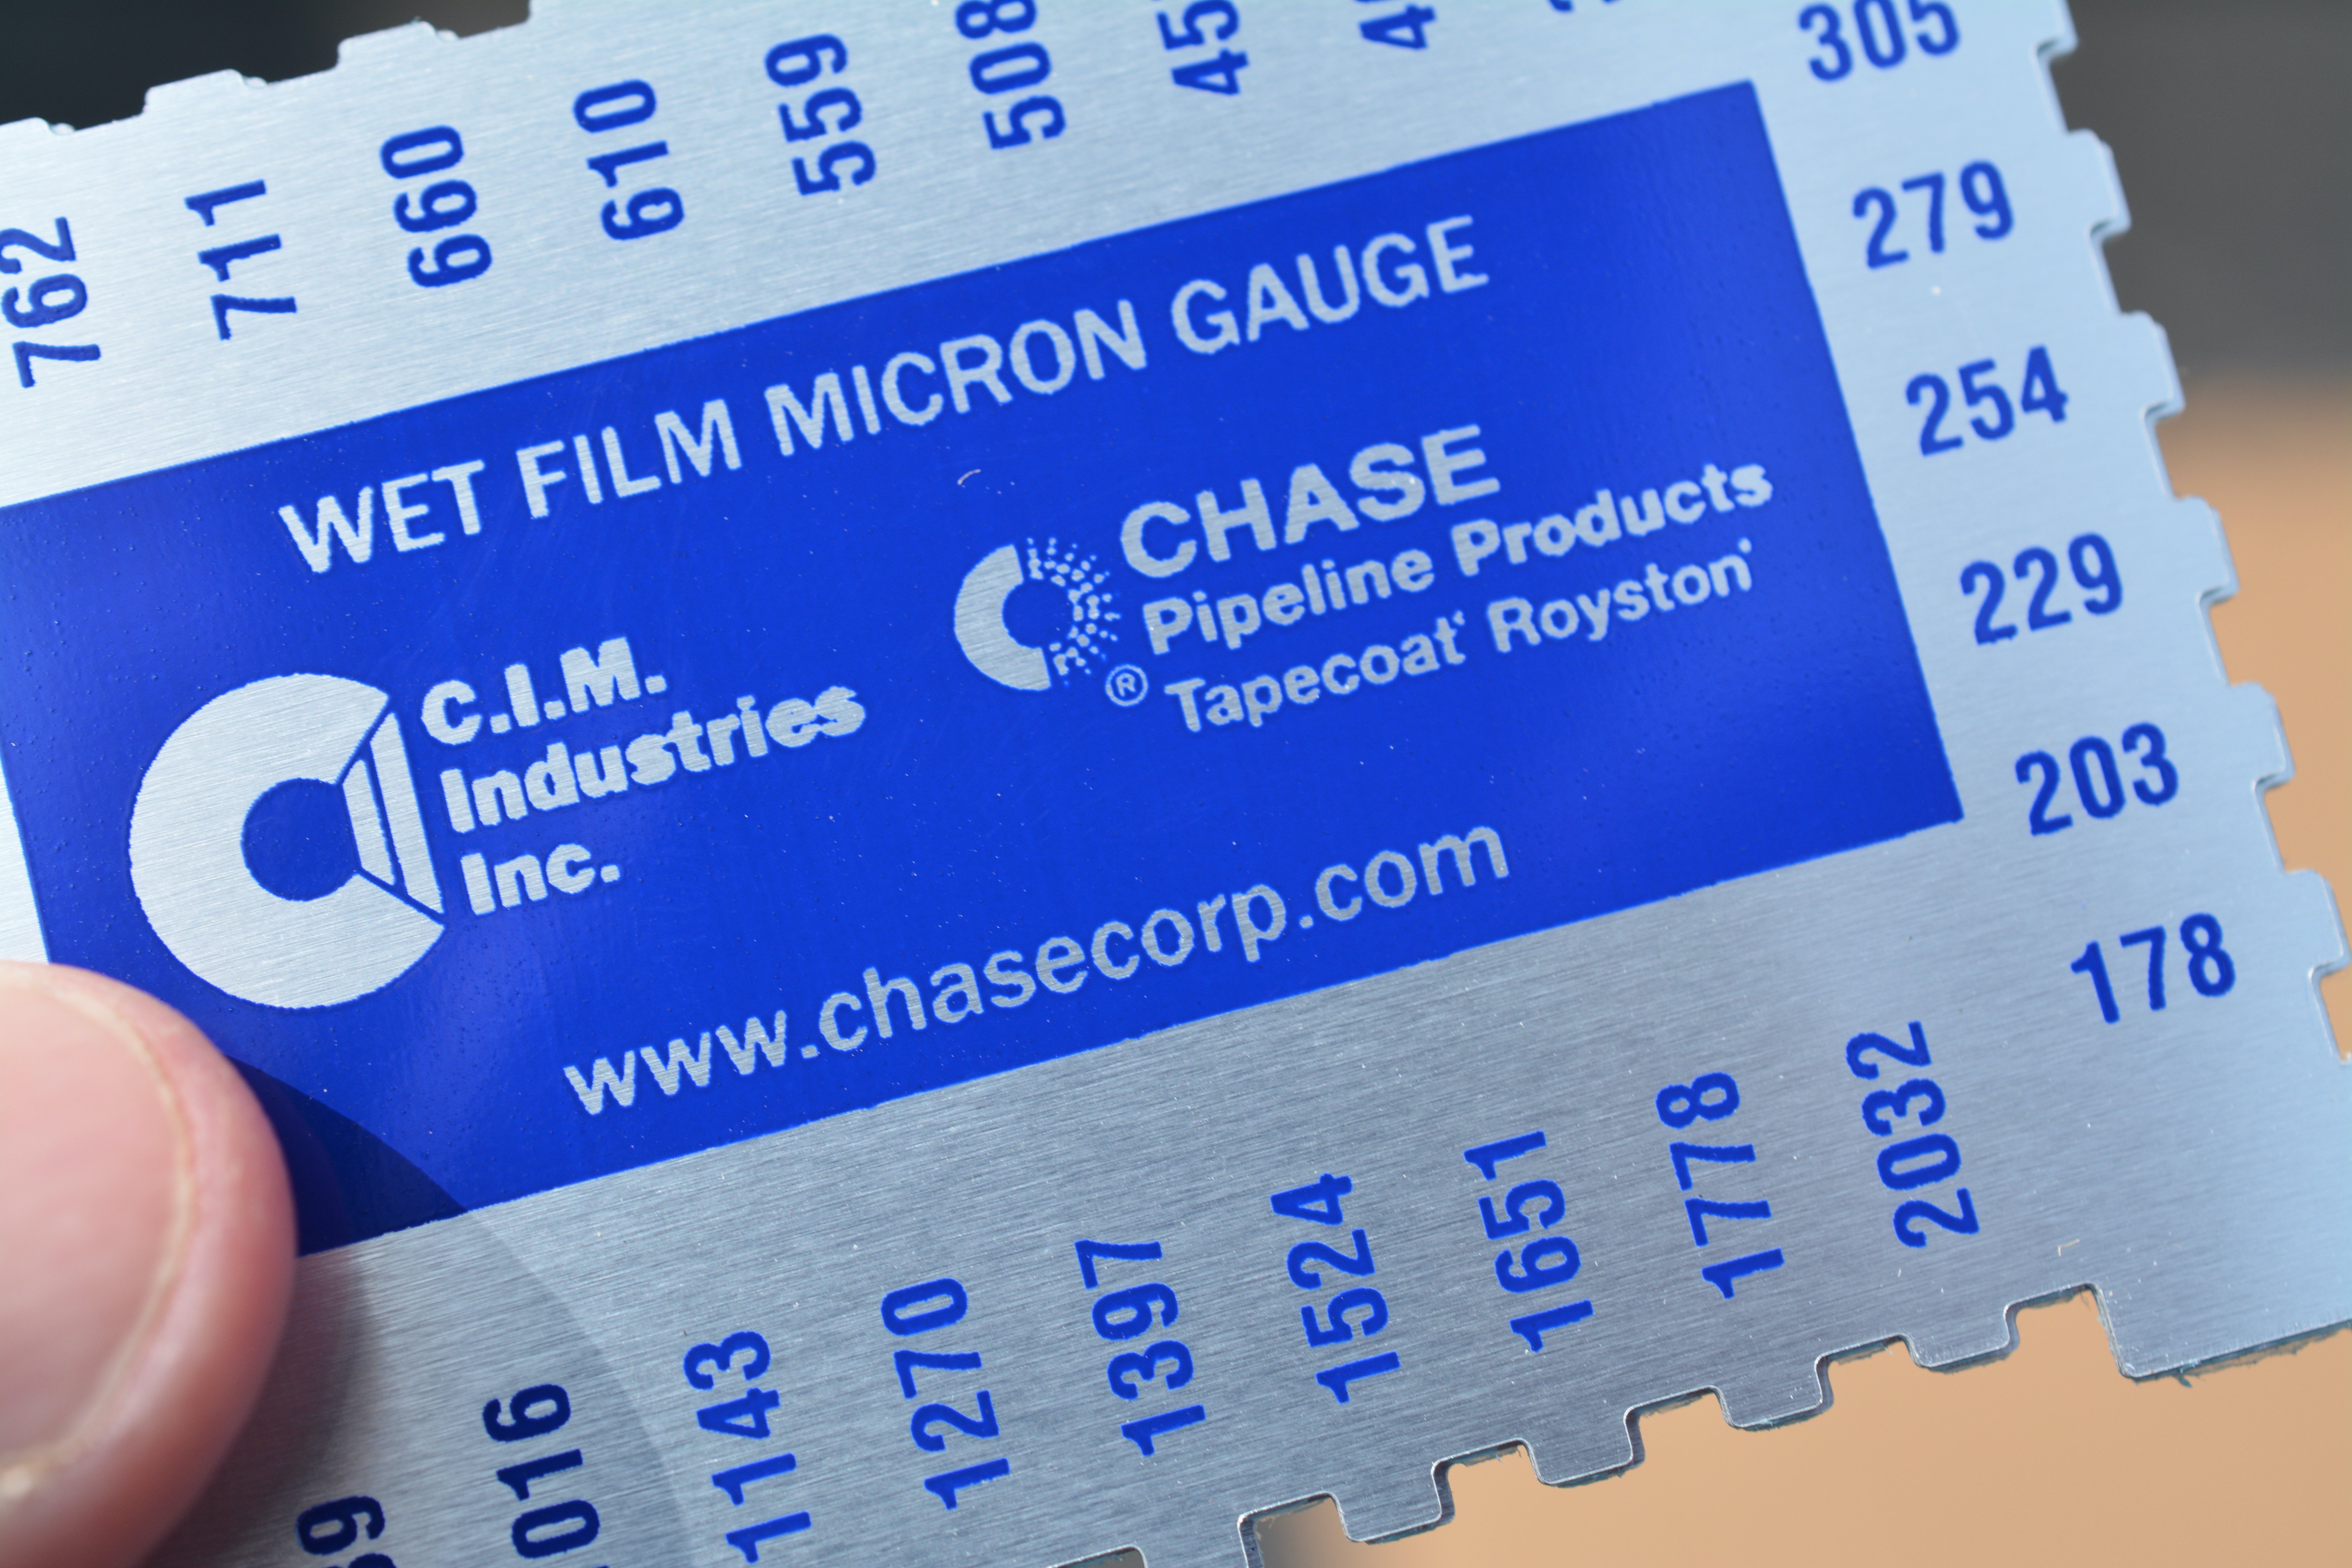 Wet Film Micron Gauge